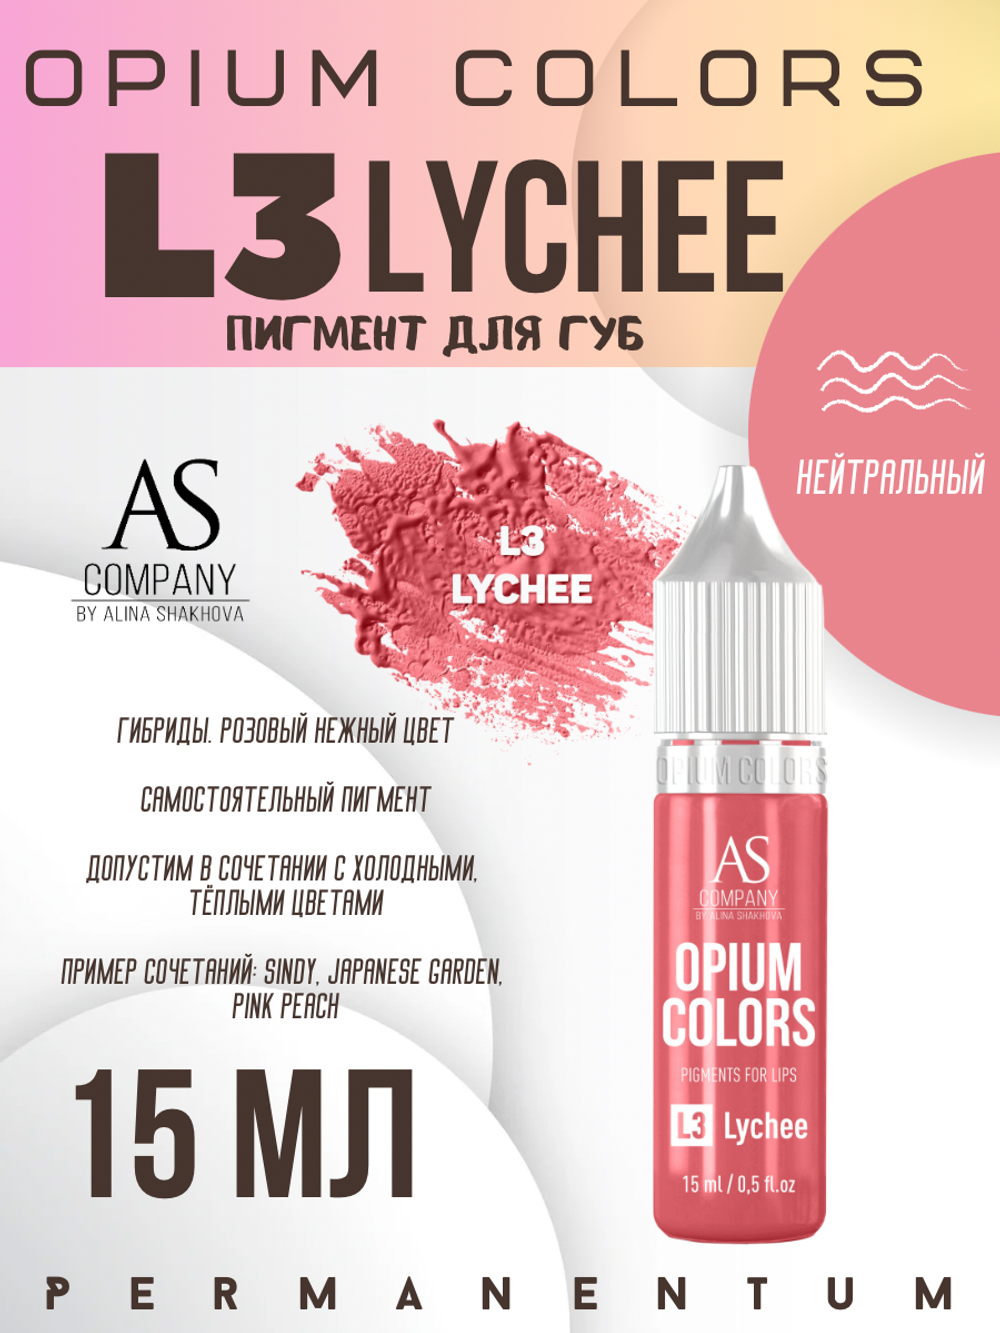 L3 LYCHEE пигмент для губ TM AS-Company OPIUM COLORS